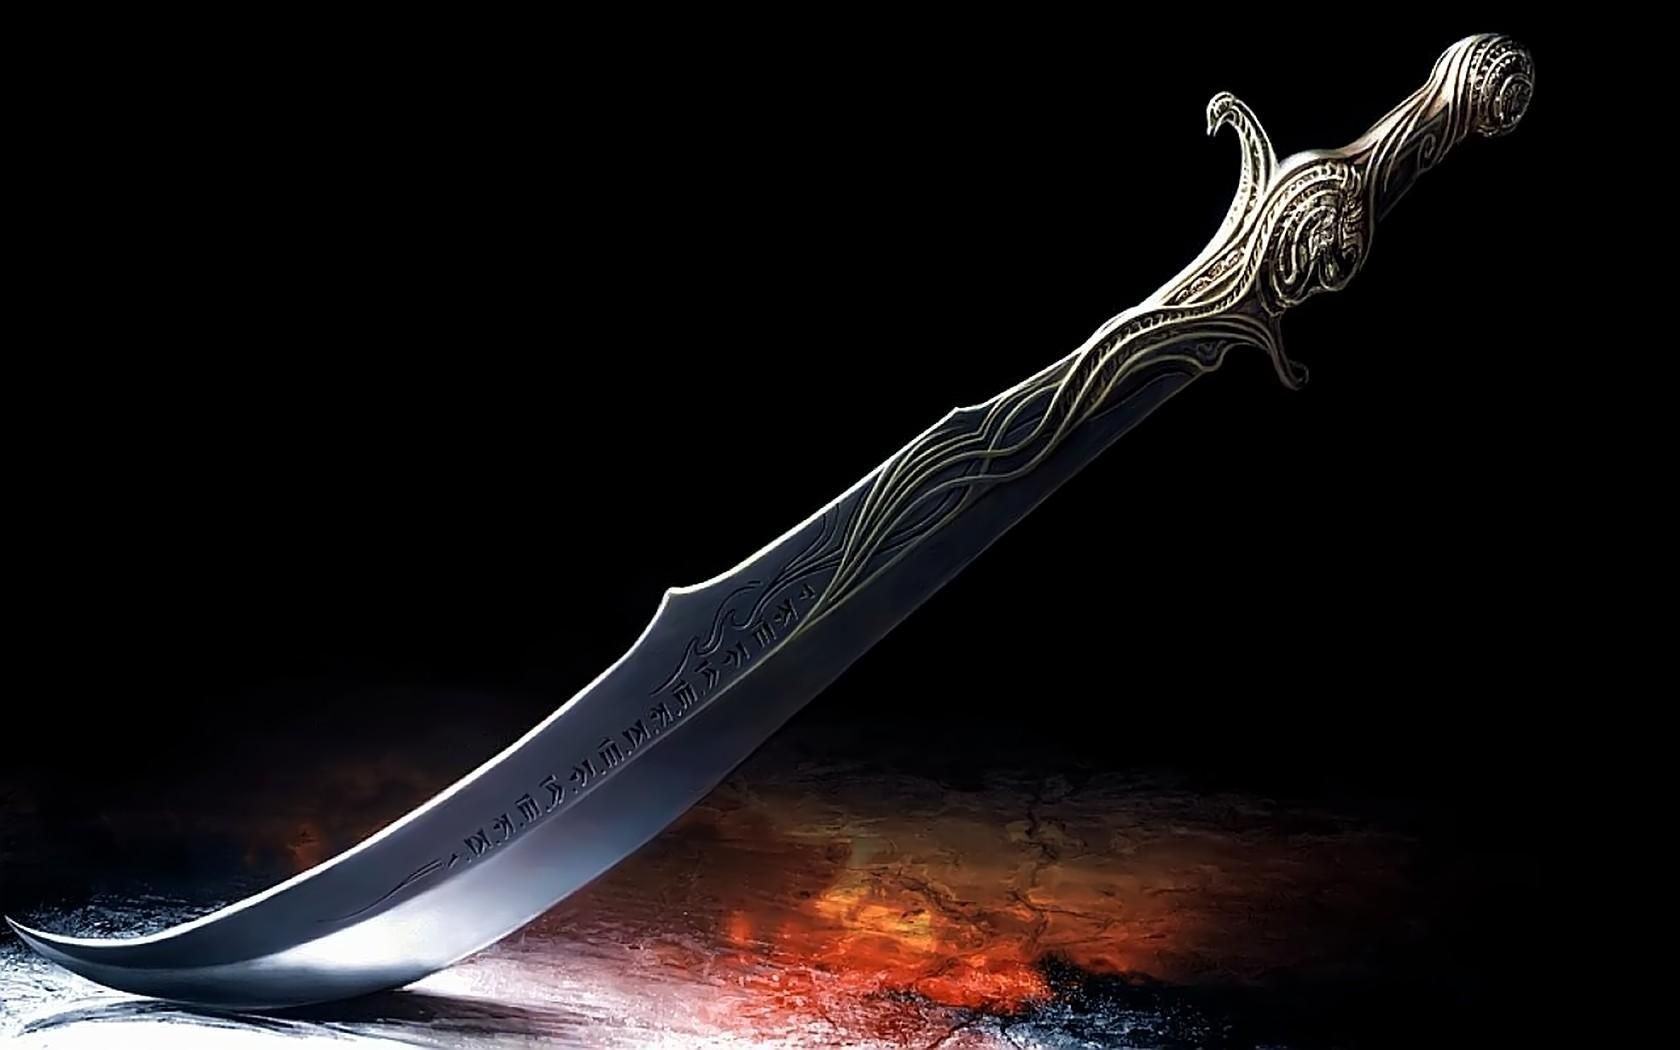 Sword HD Wallpaper, Sword Backgrounds, Sword Images, New Backgrounds